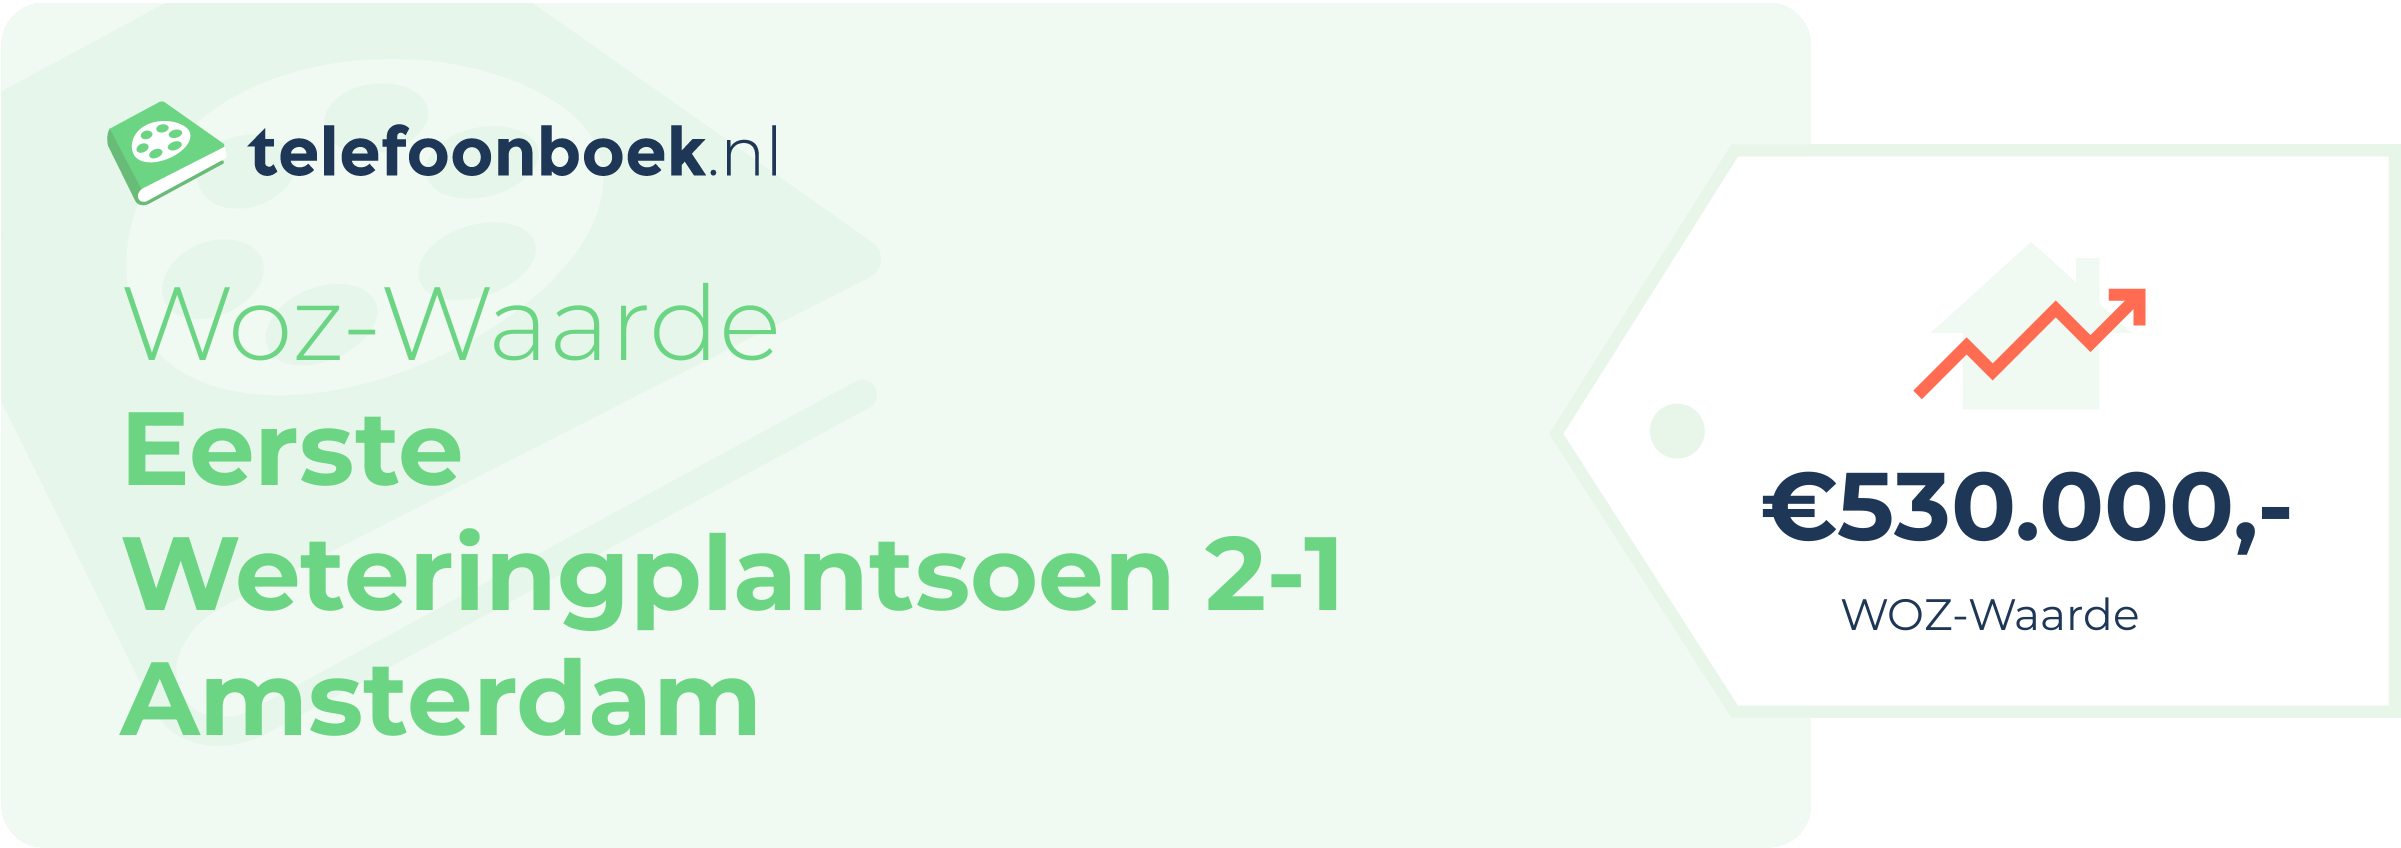 WOZ-waarde Eerste Weteringplantsoen 2-1 Amsterdam